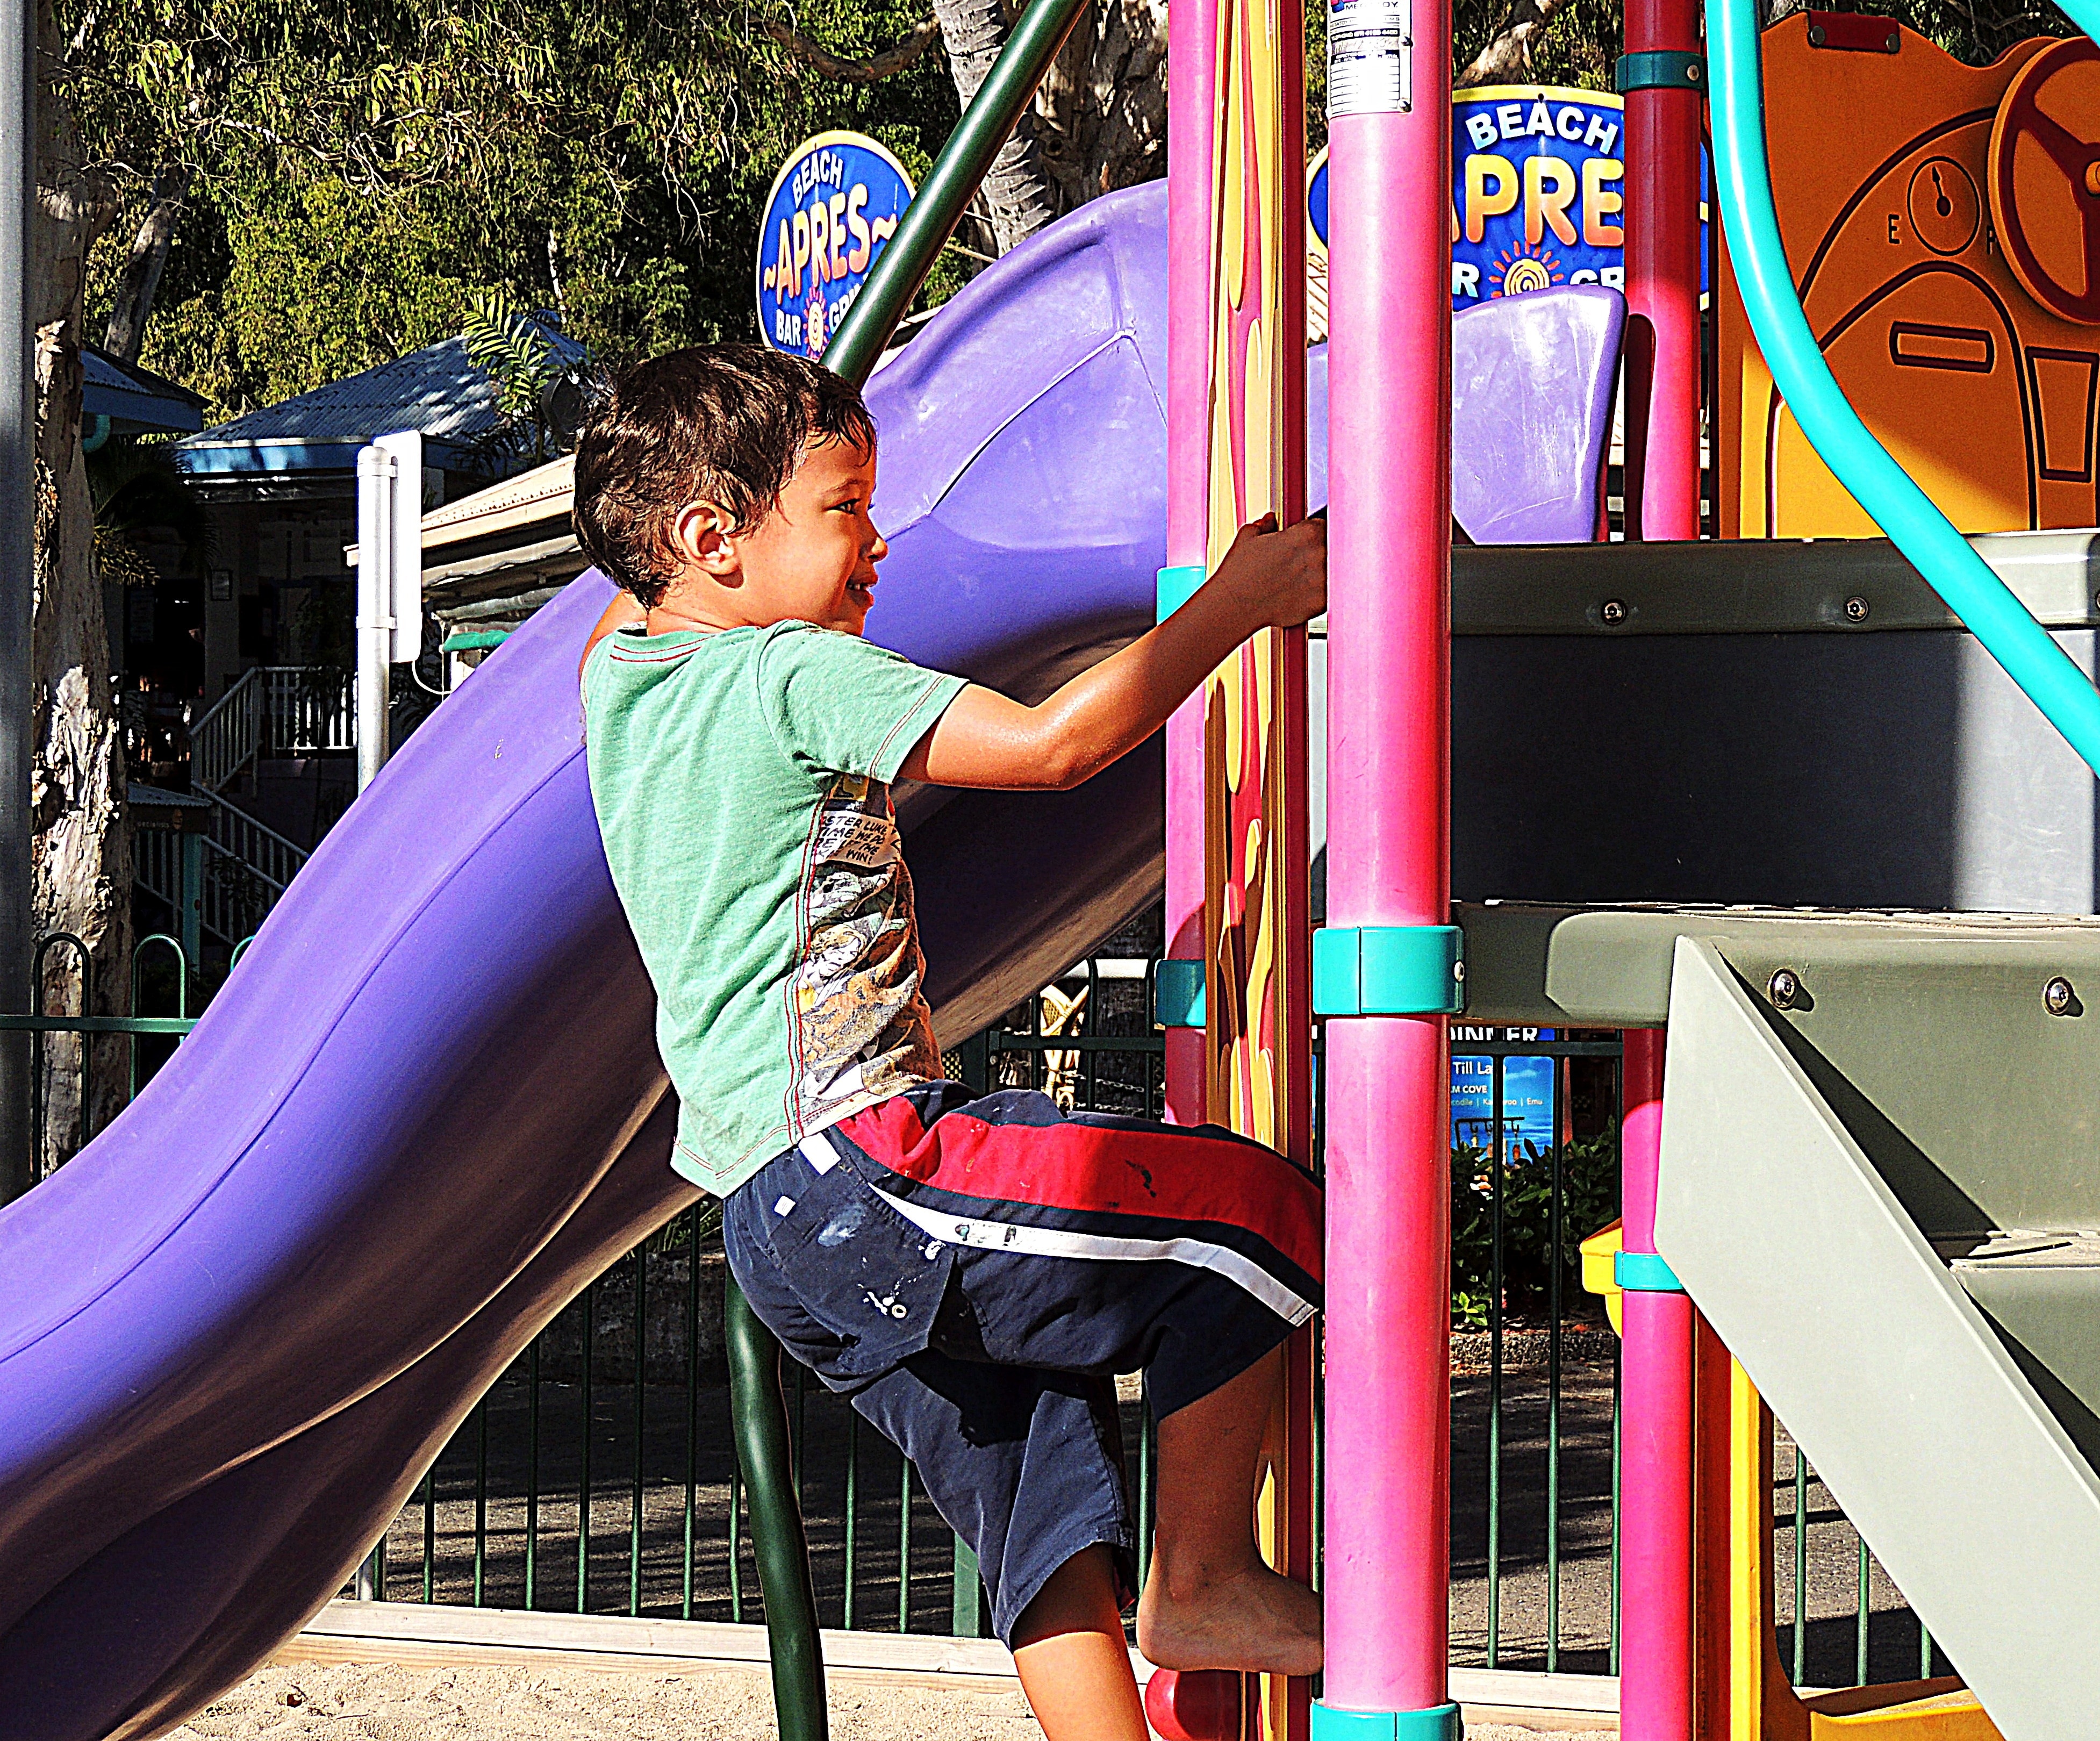 child climbing outdoor slides during daytime photo